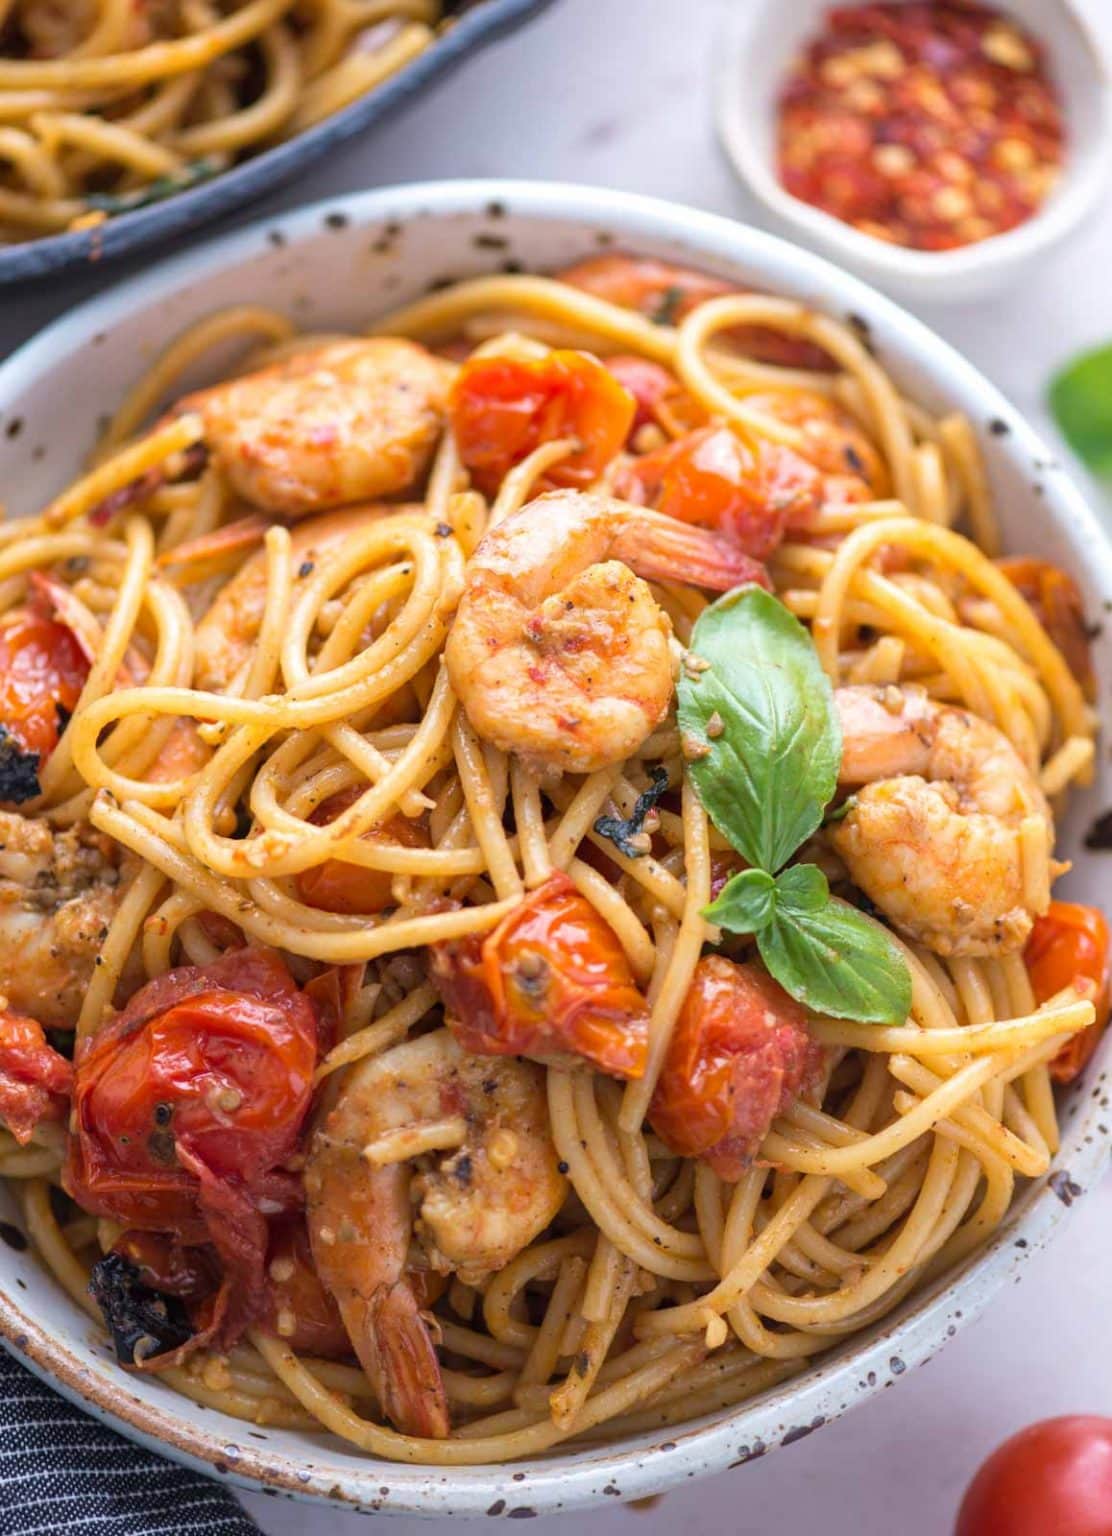 Cherry Tomato Pasta with Shrimp - The flavours of kitchen